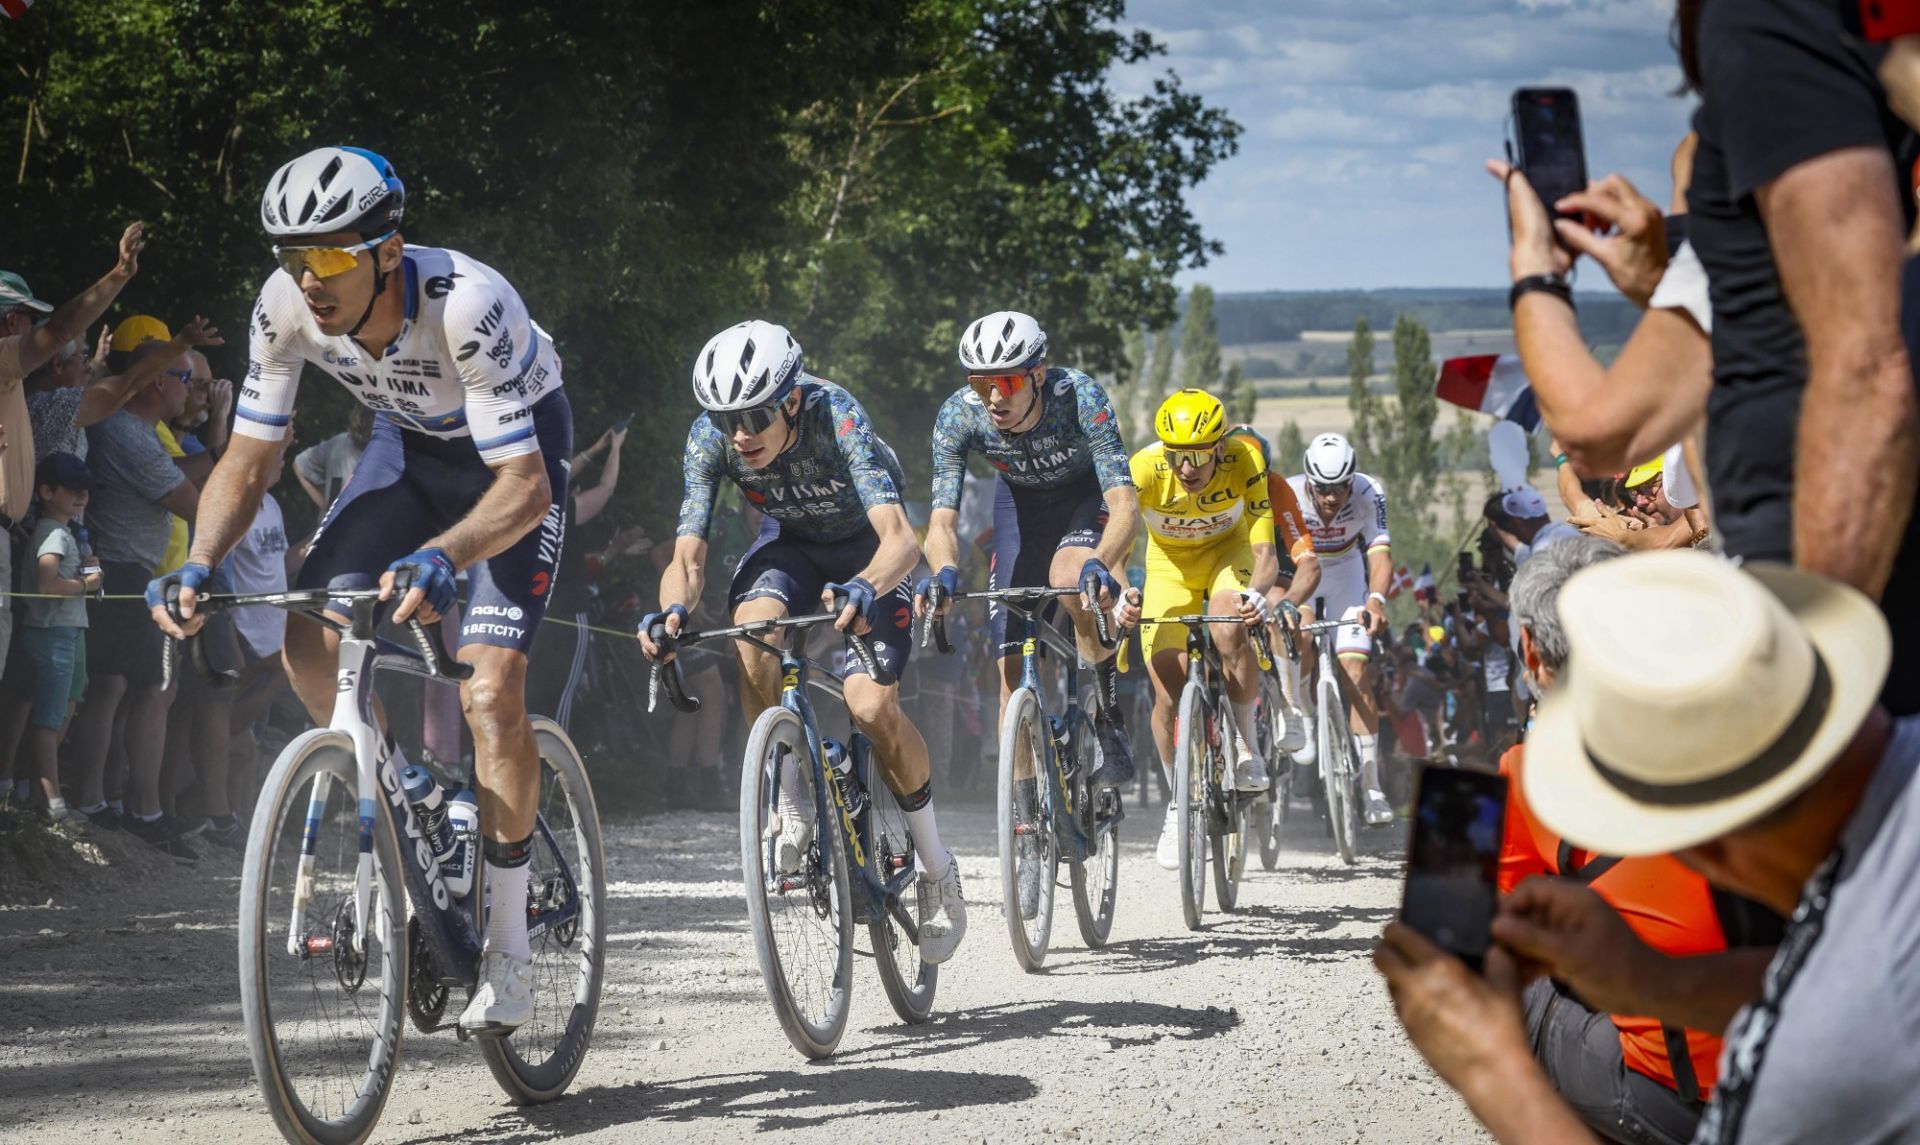 Team Visma | Lease a Bike riders in the Tour de France